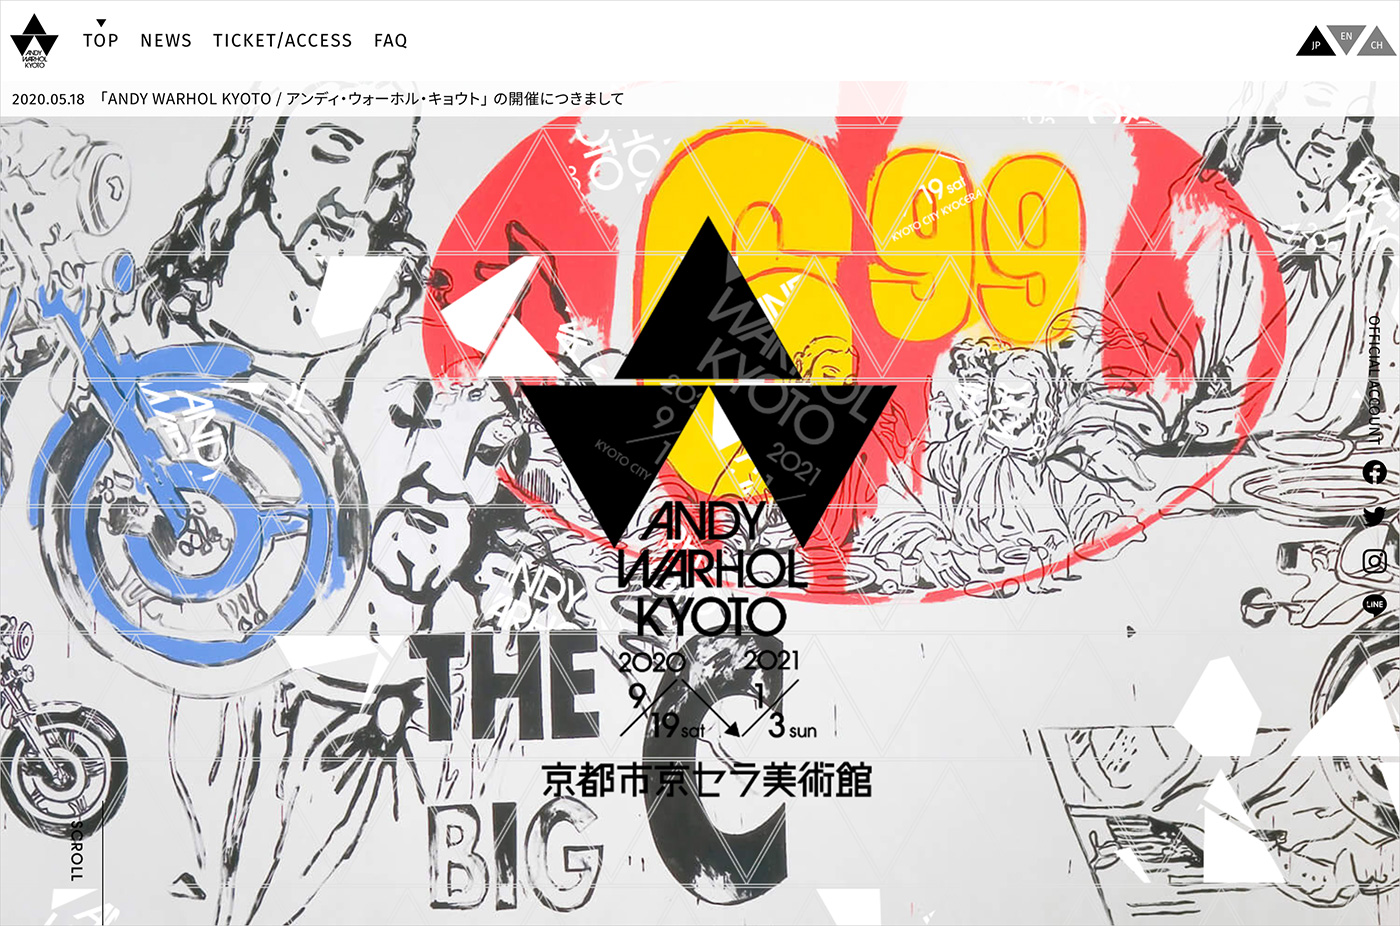 Andy Warhol Kyoto アンディ ウォーホル キョウト Good Web Design